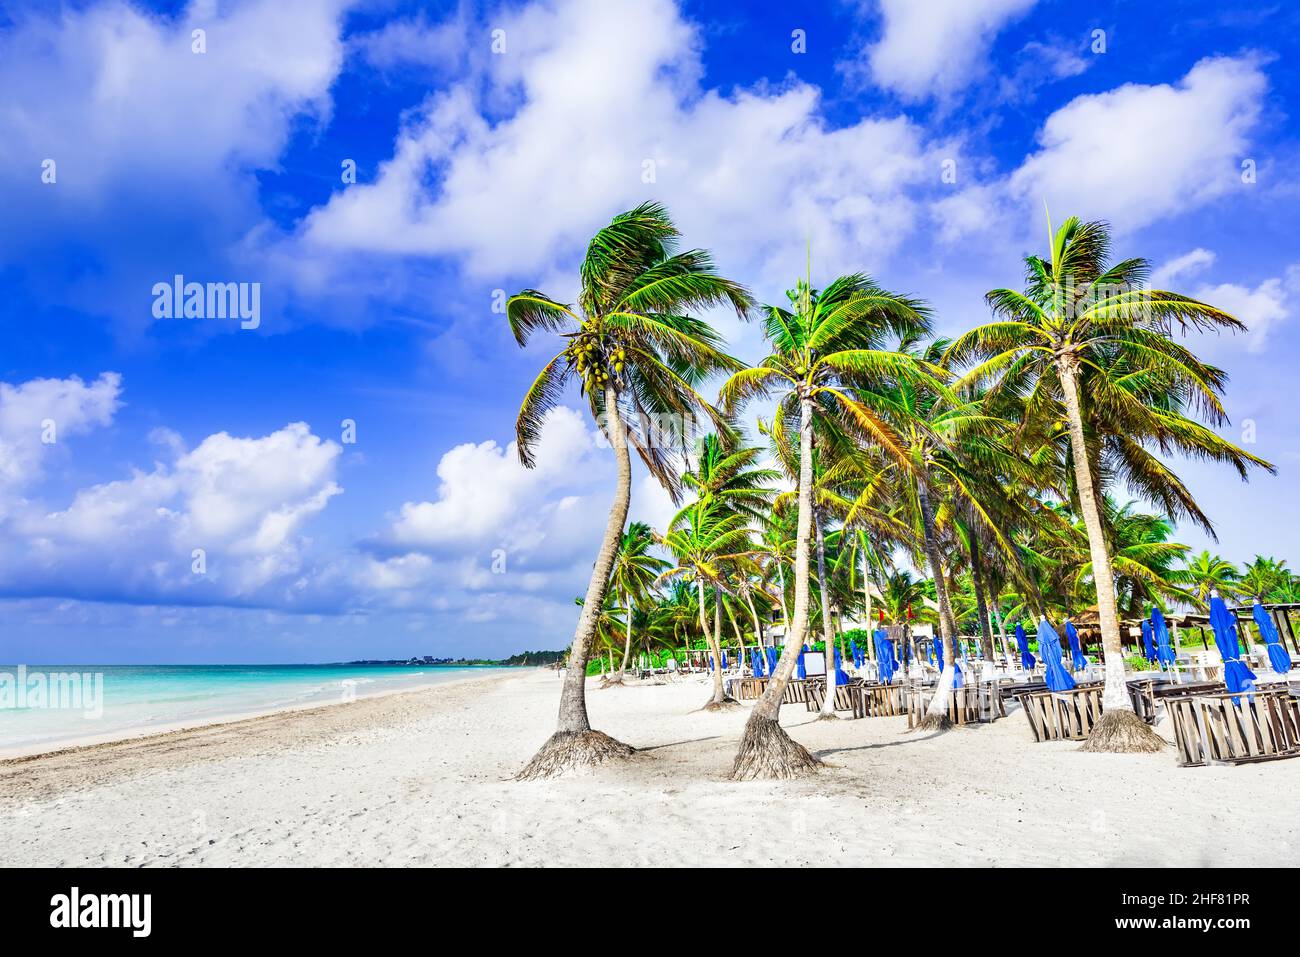 Riviera Maya, Messico - Playa Paraiso (Paradise Beach) al sole estate bella costa tropicale caraibica di Tulum in Quintana Roo, Cancun. Foto Stock